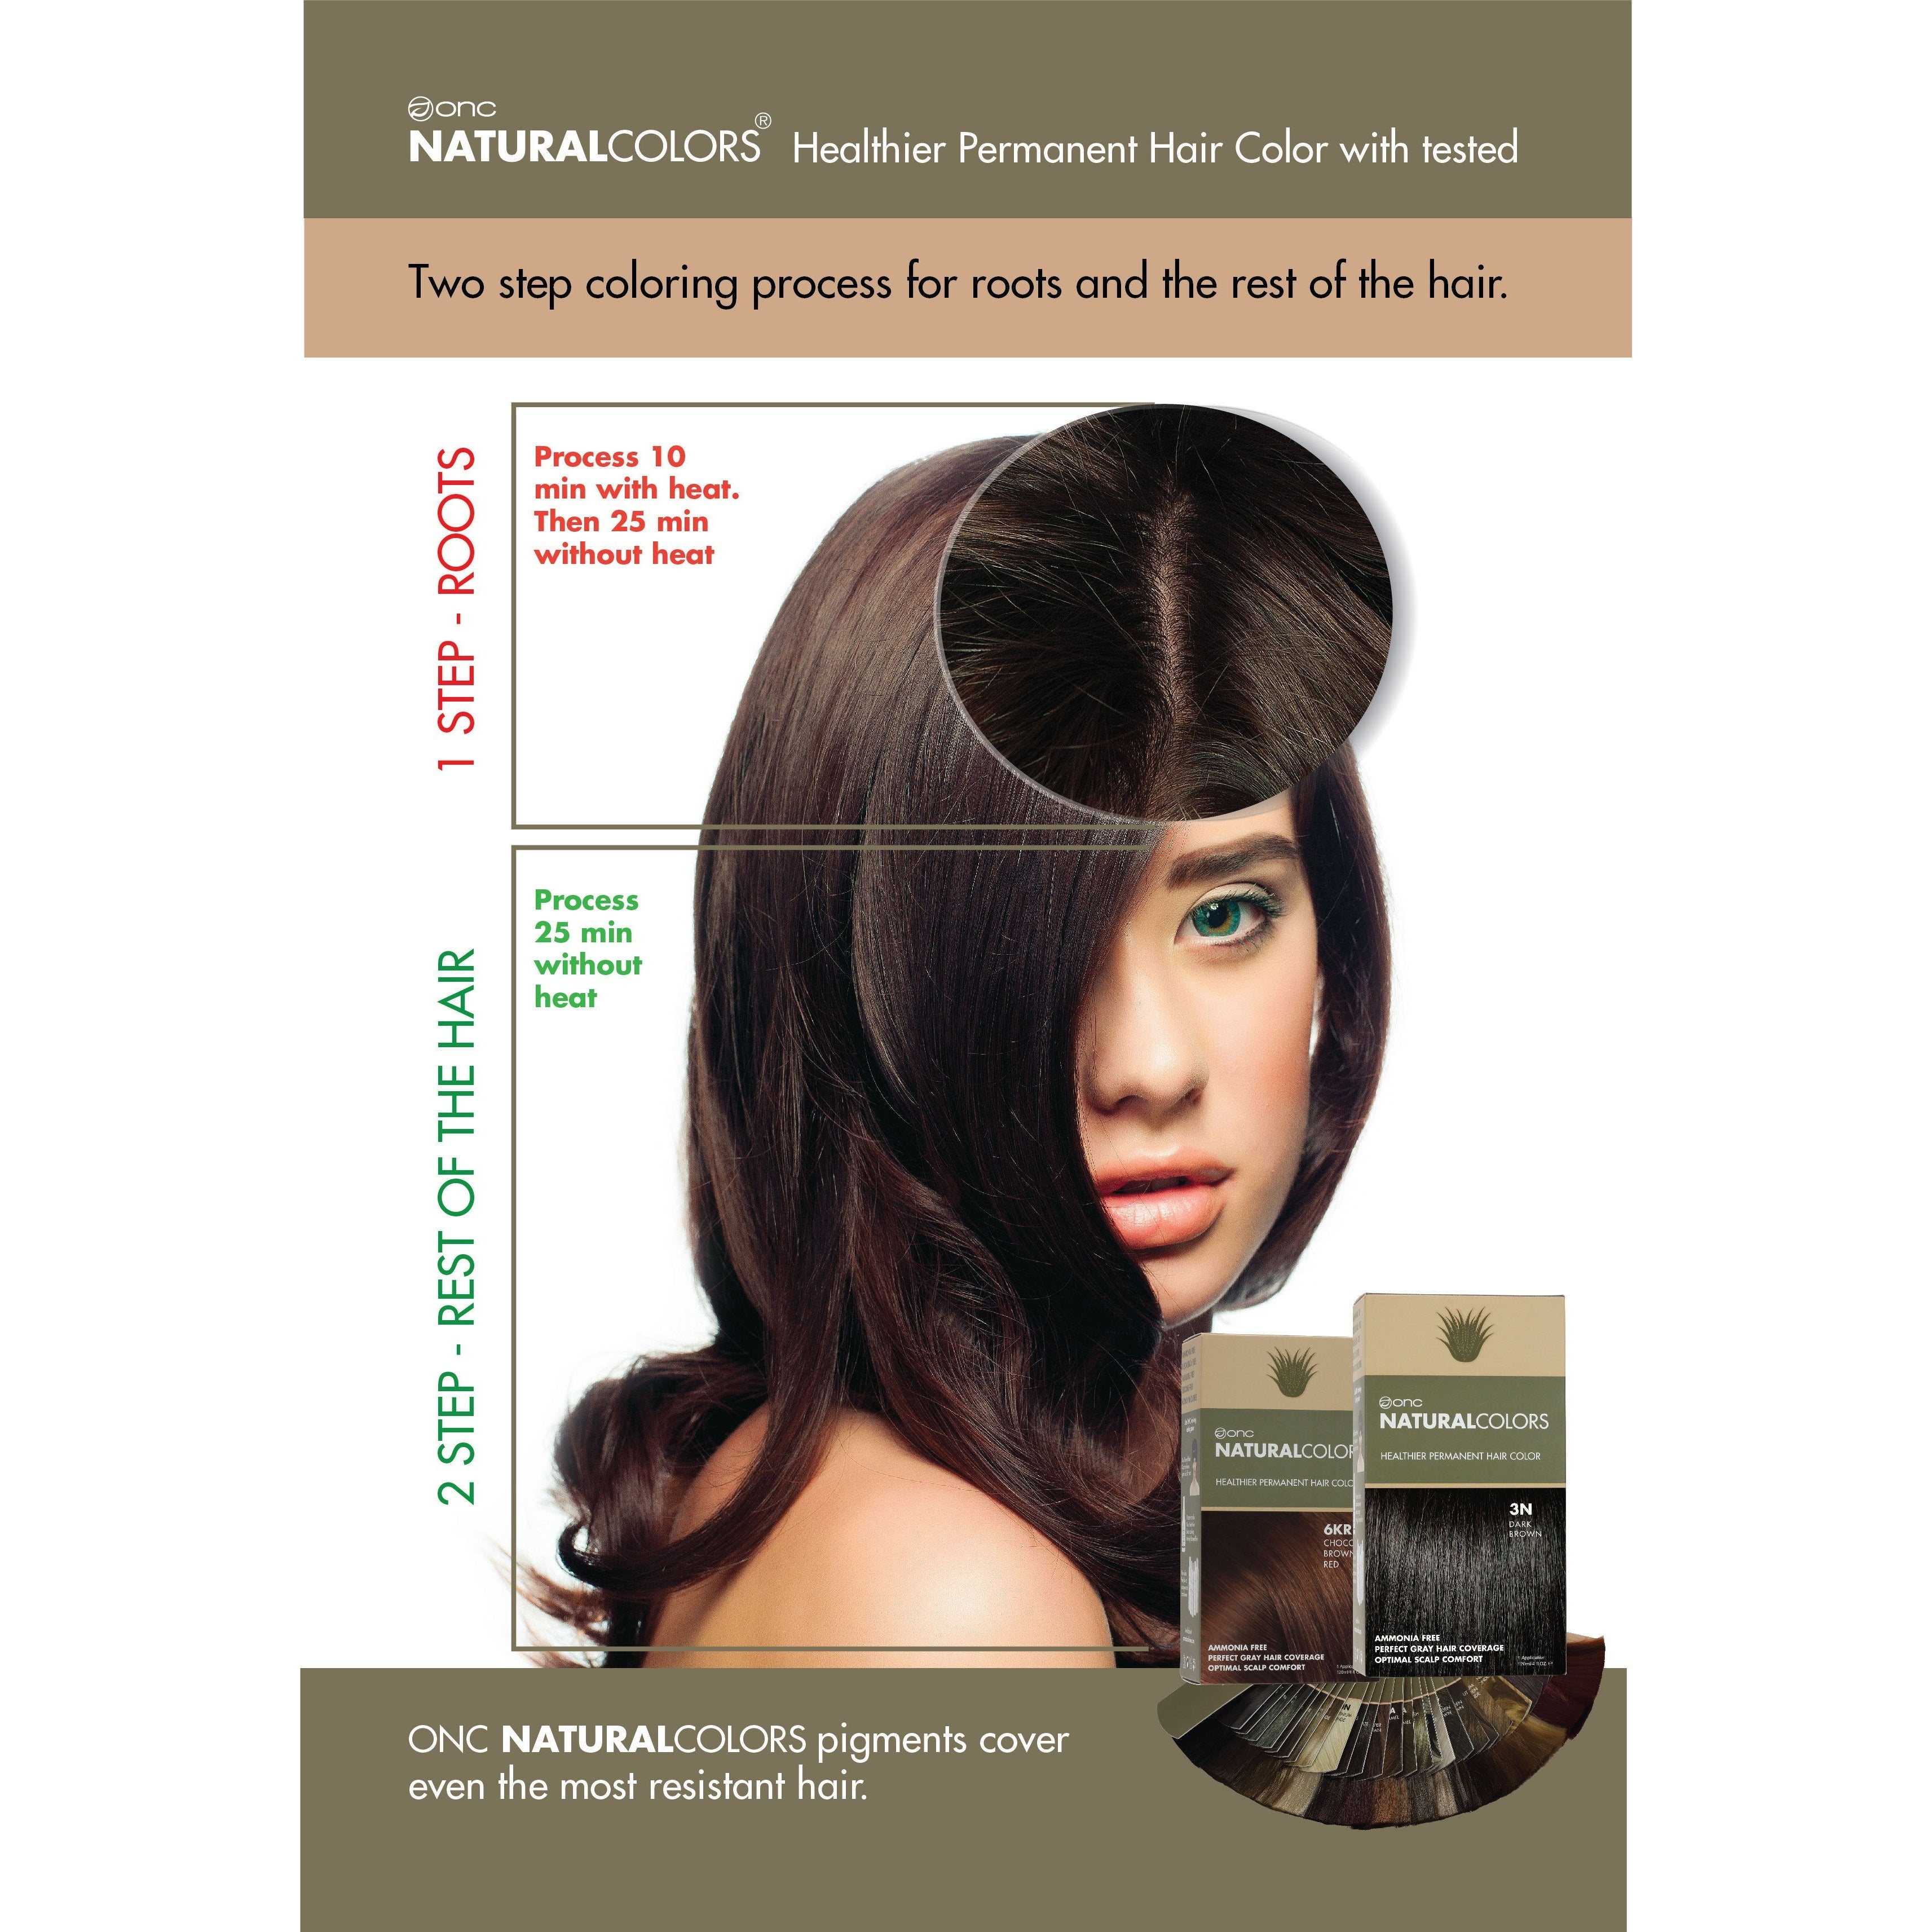 10C Light Ash Blonde Heat Activated Hair Dye With Organic Ingredients - 120 ml (4 fl. oz)